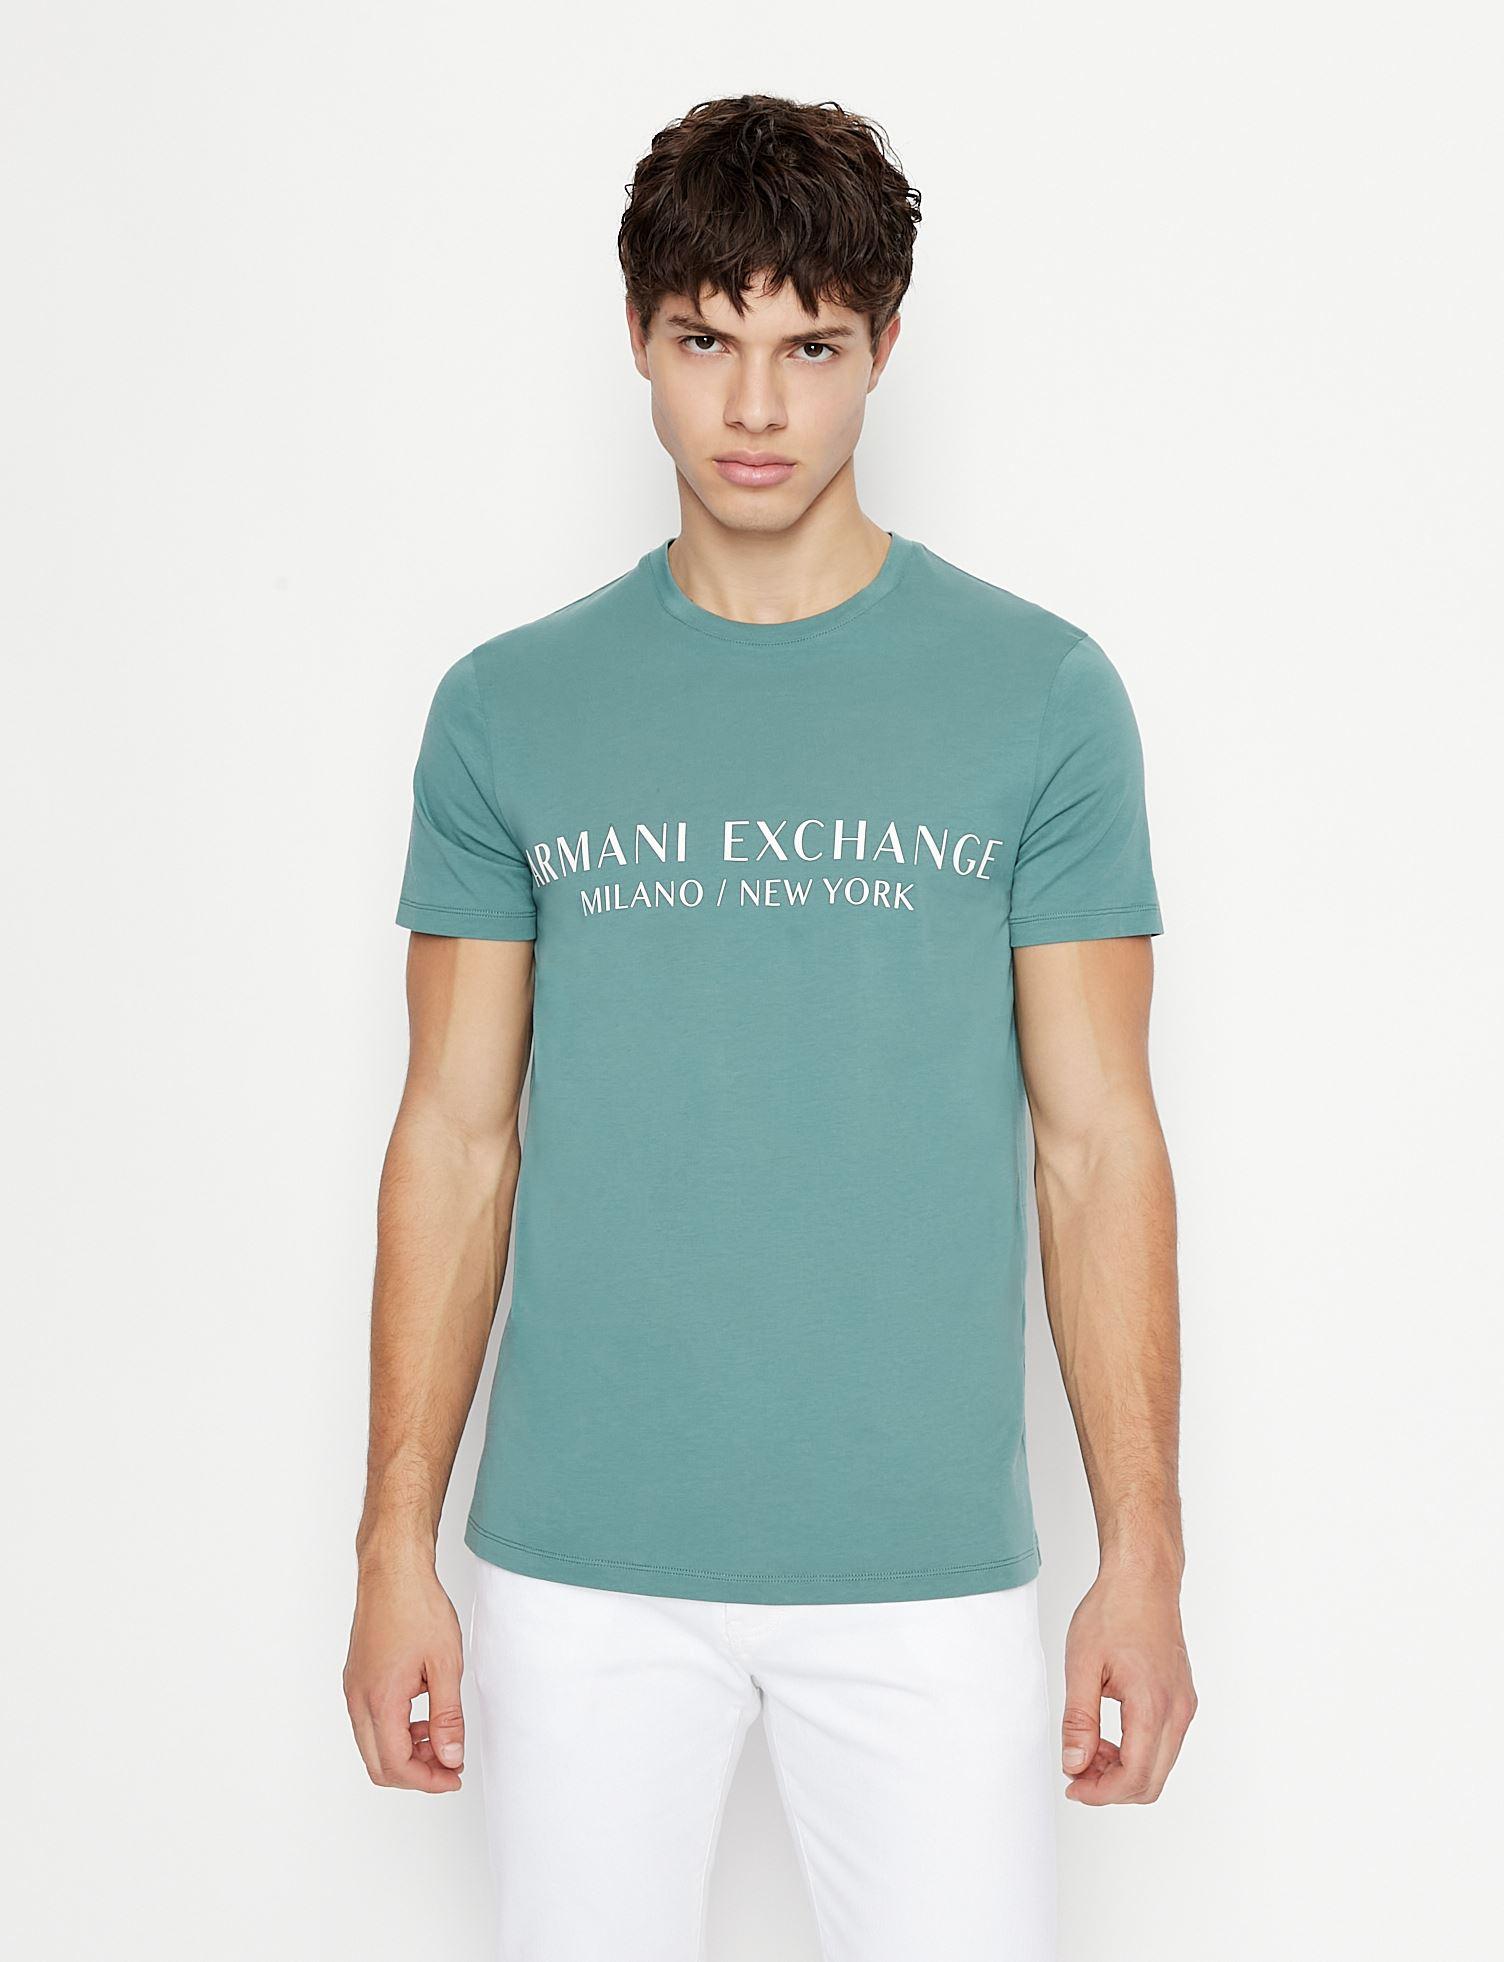 Armani Exchange Milano New York Regular Fit T-shirt in Blue for Men | Lyst